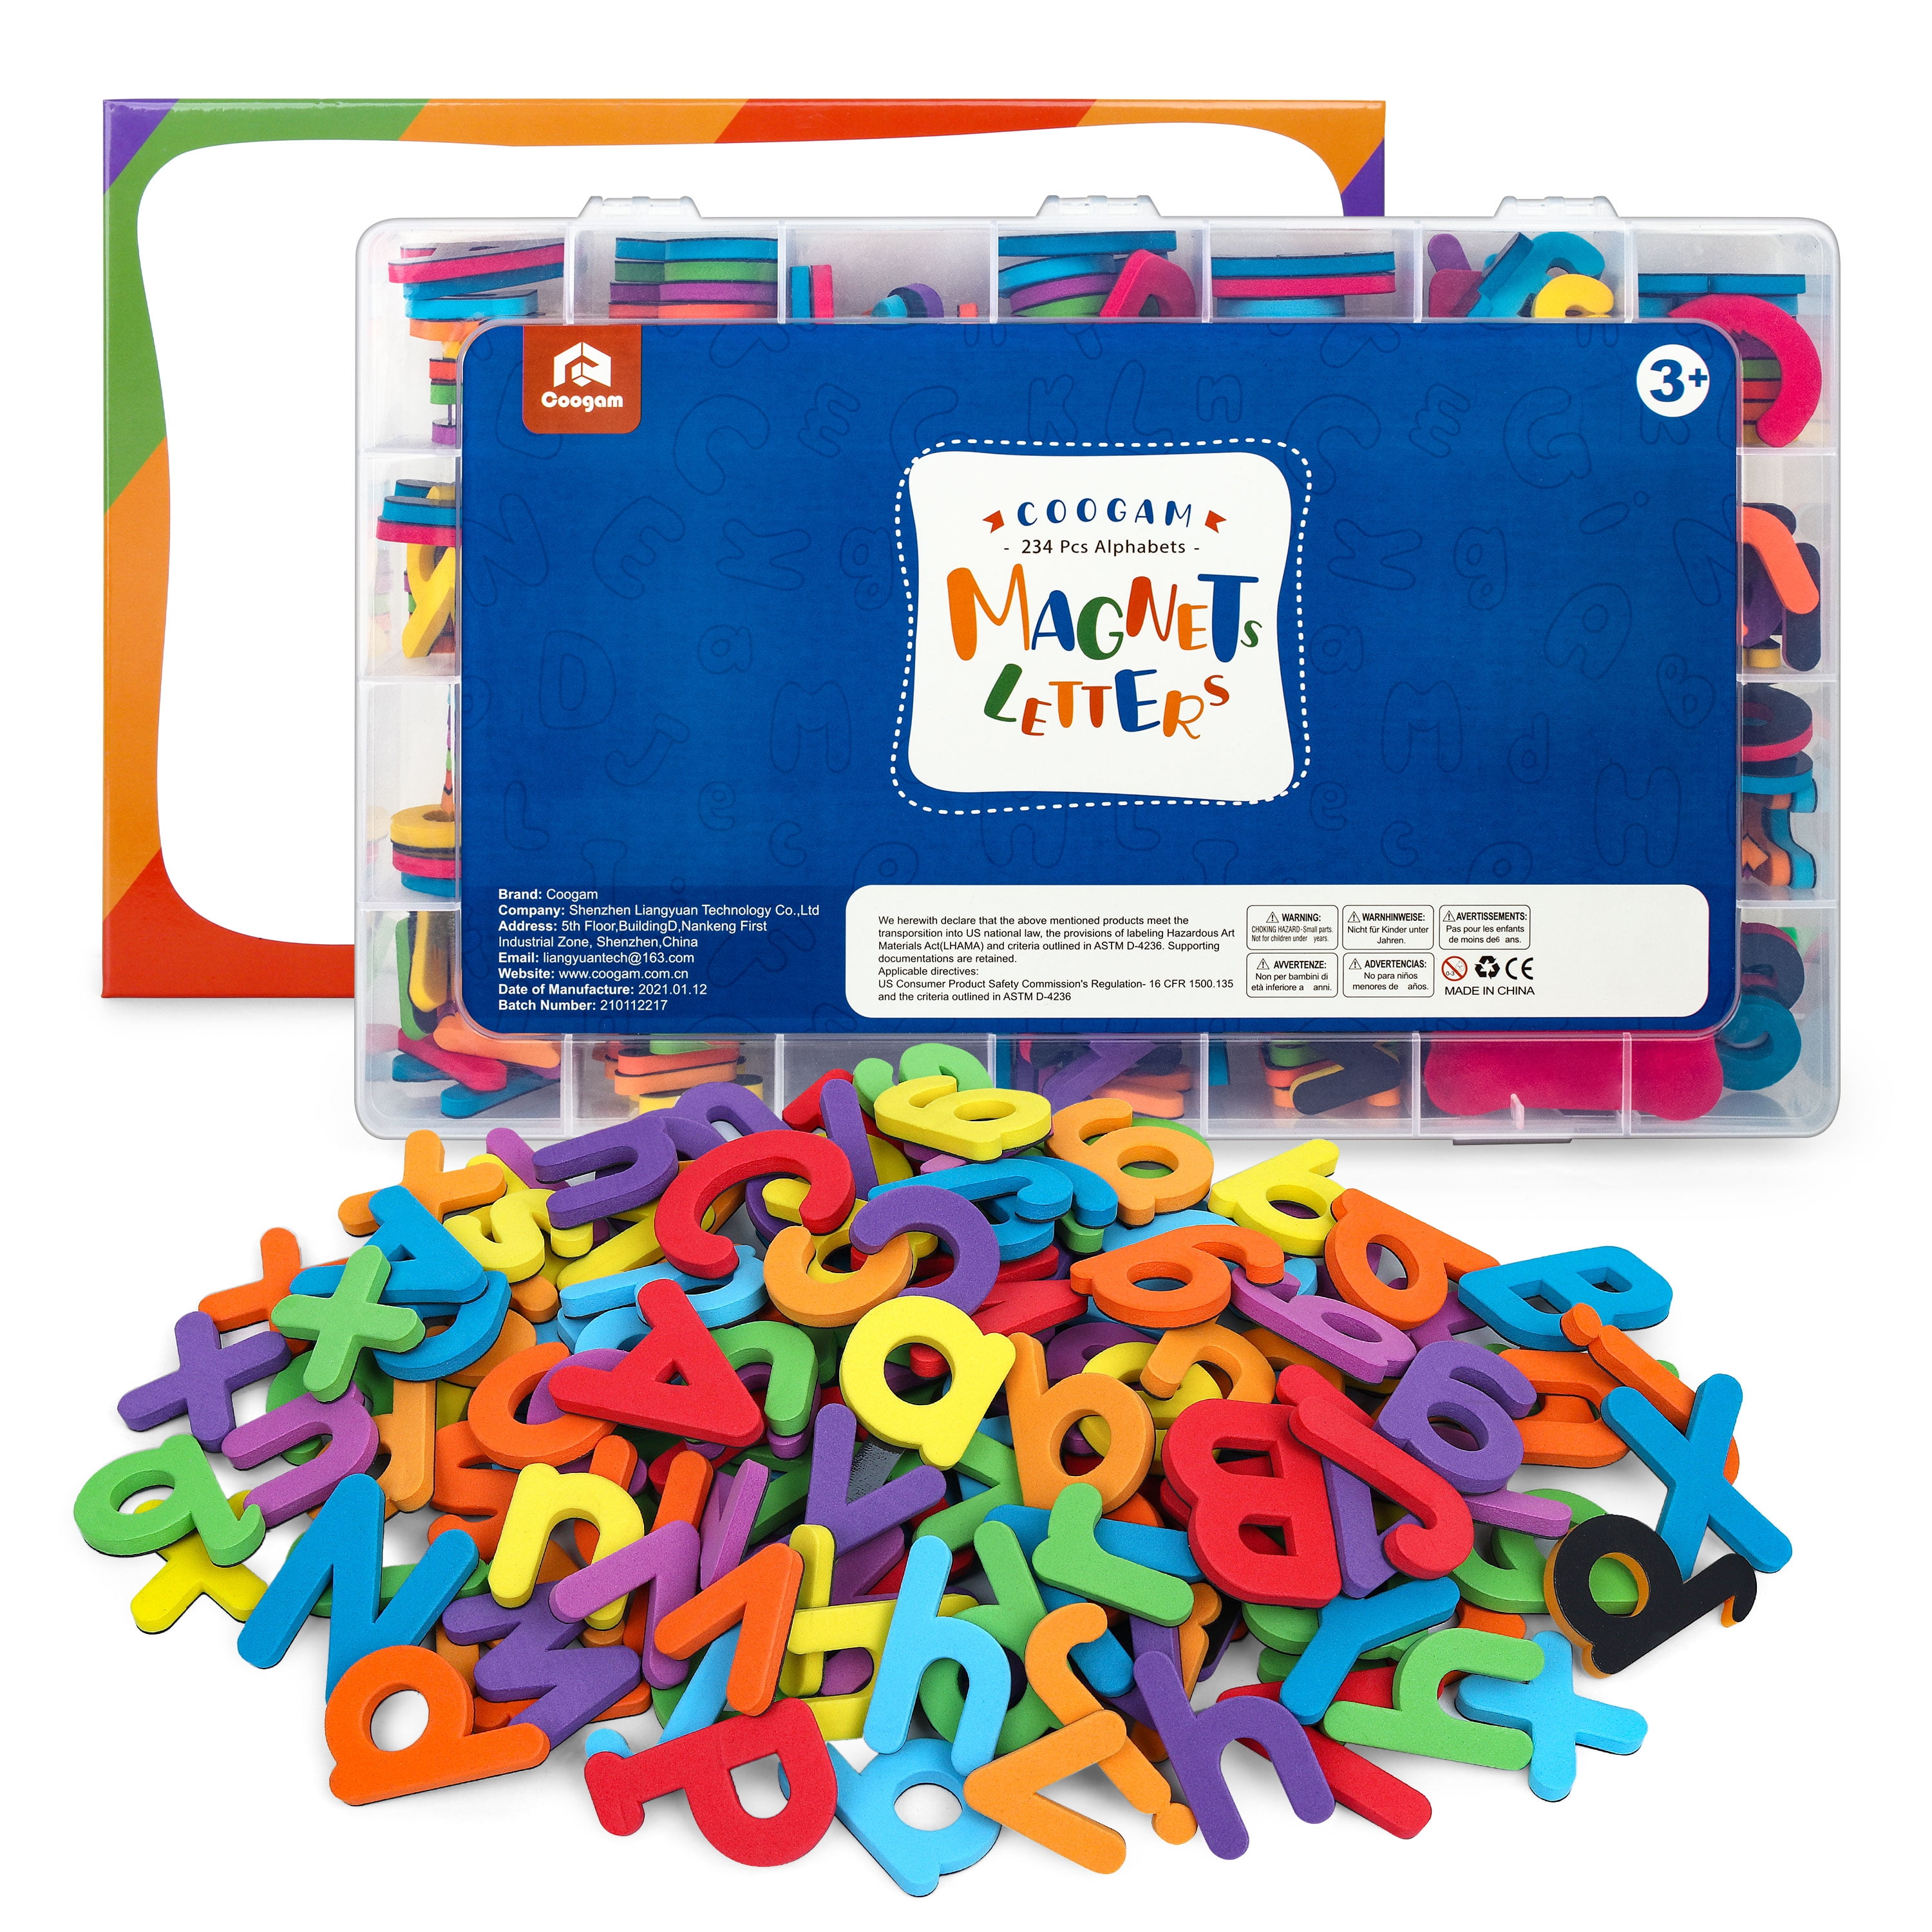 54 Magnetic Letter Number Blue Preschool Magnetic Letter & Number Learning Dry Erase Board and Tangram Magnets Set for Kids/Toddler Homeschool Education Kid’s Whiteboard Symbols 